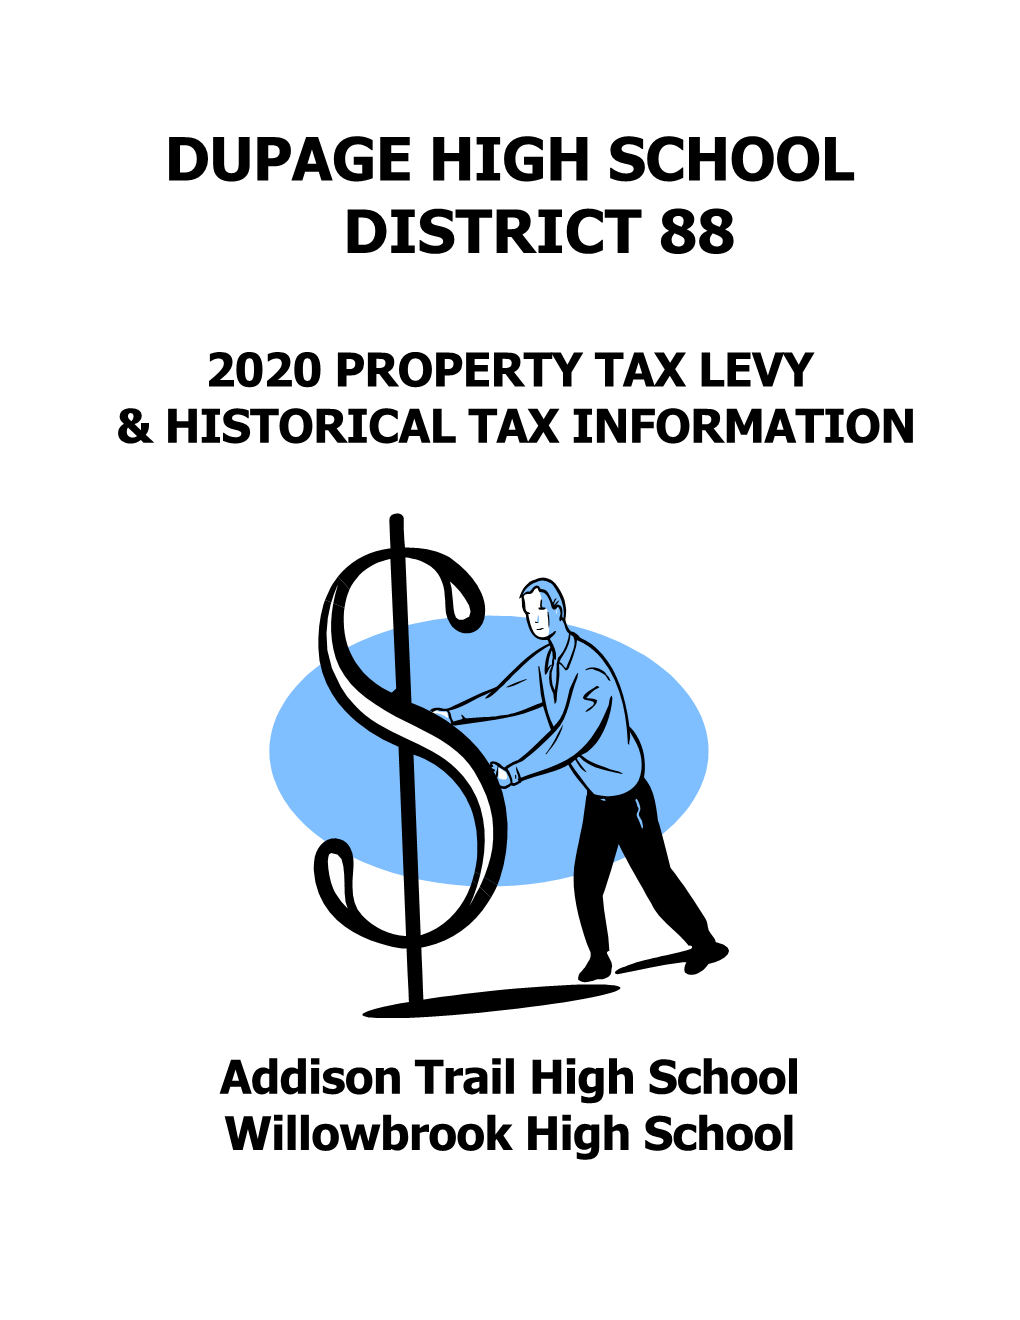 Tax Rate Comparison - Township Addison Township (District #4)